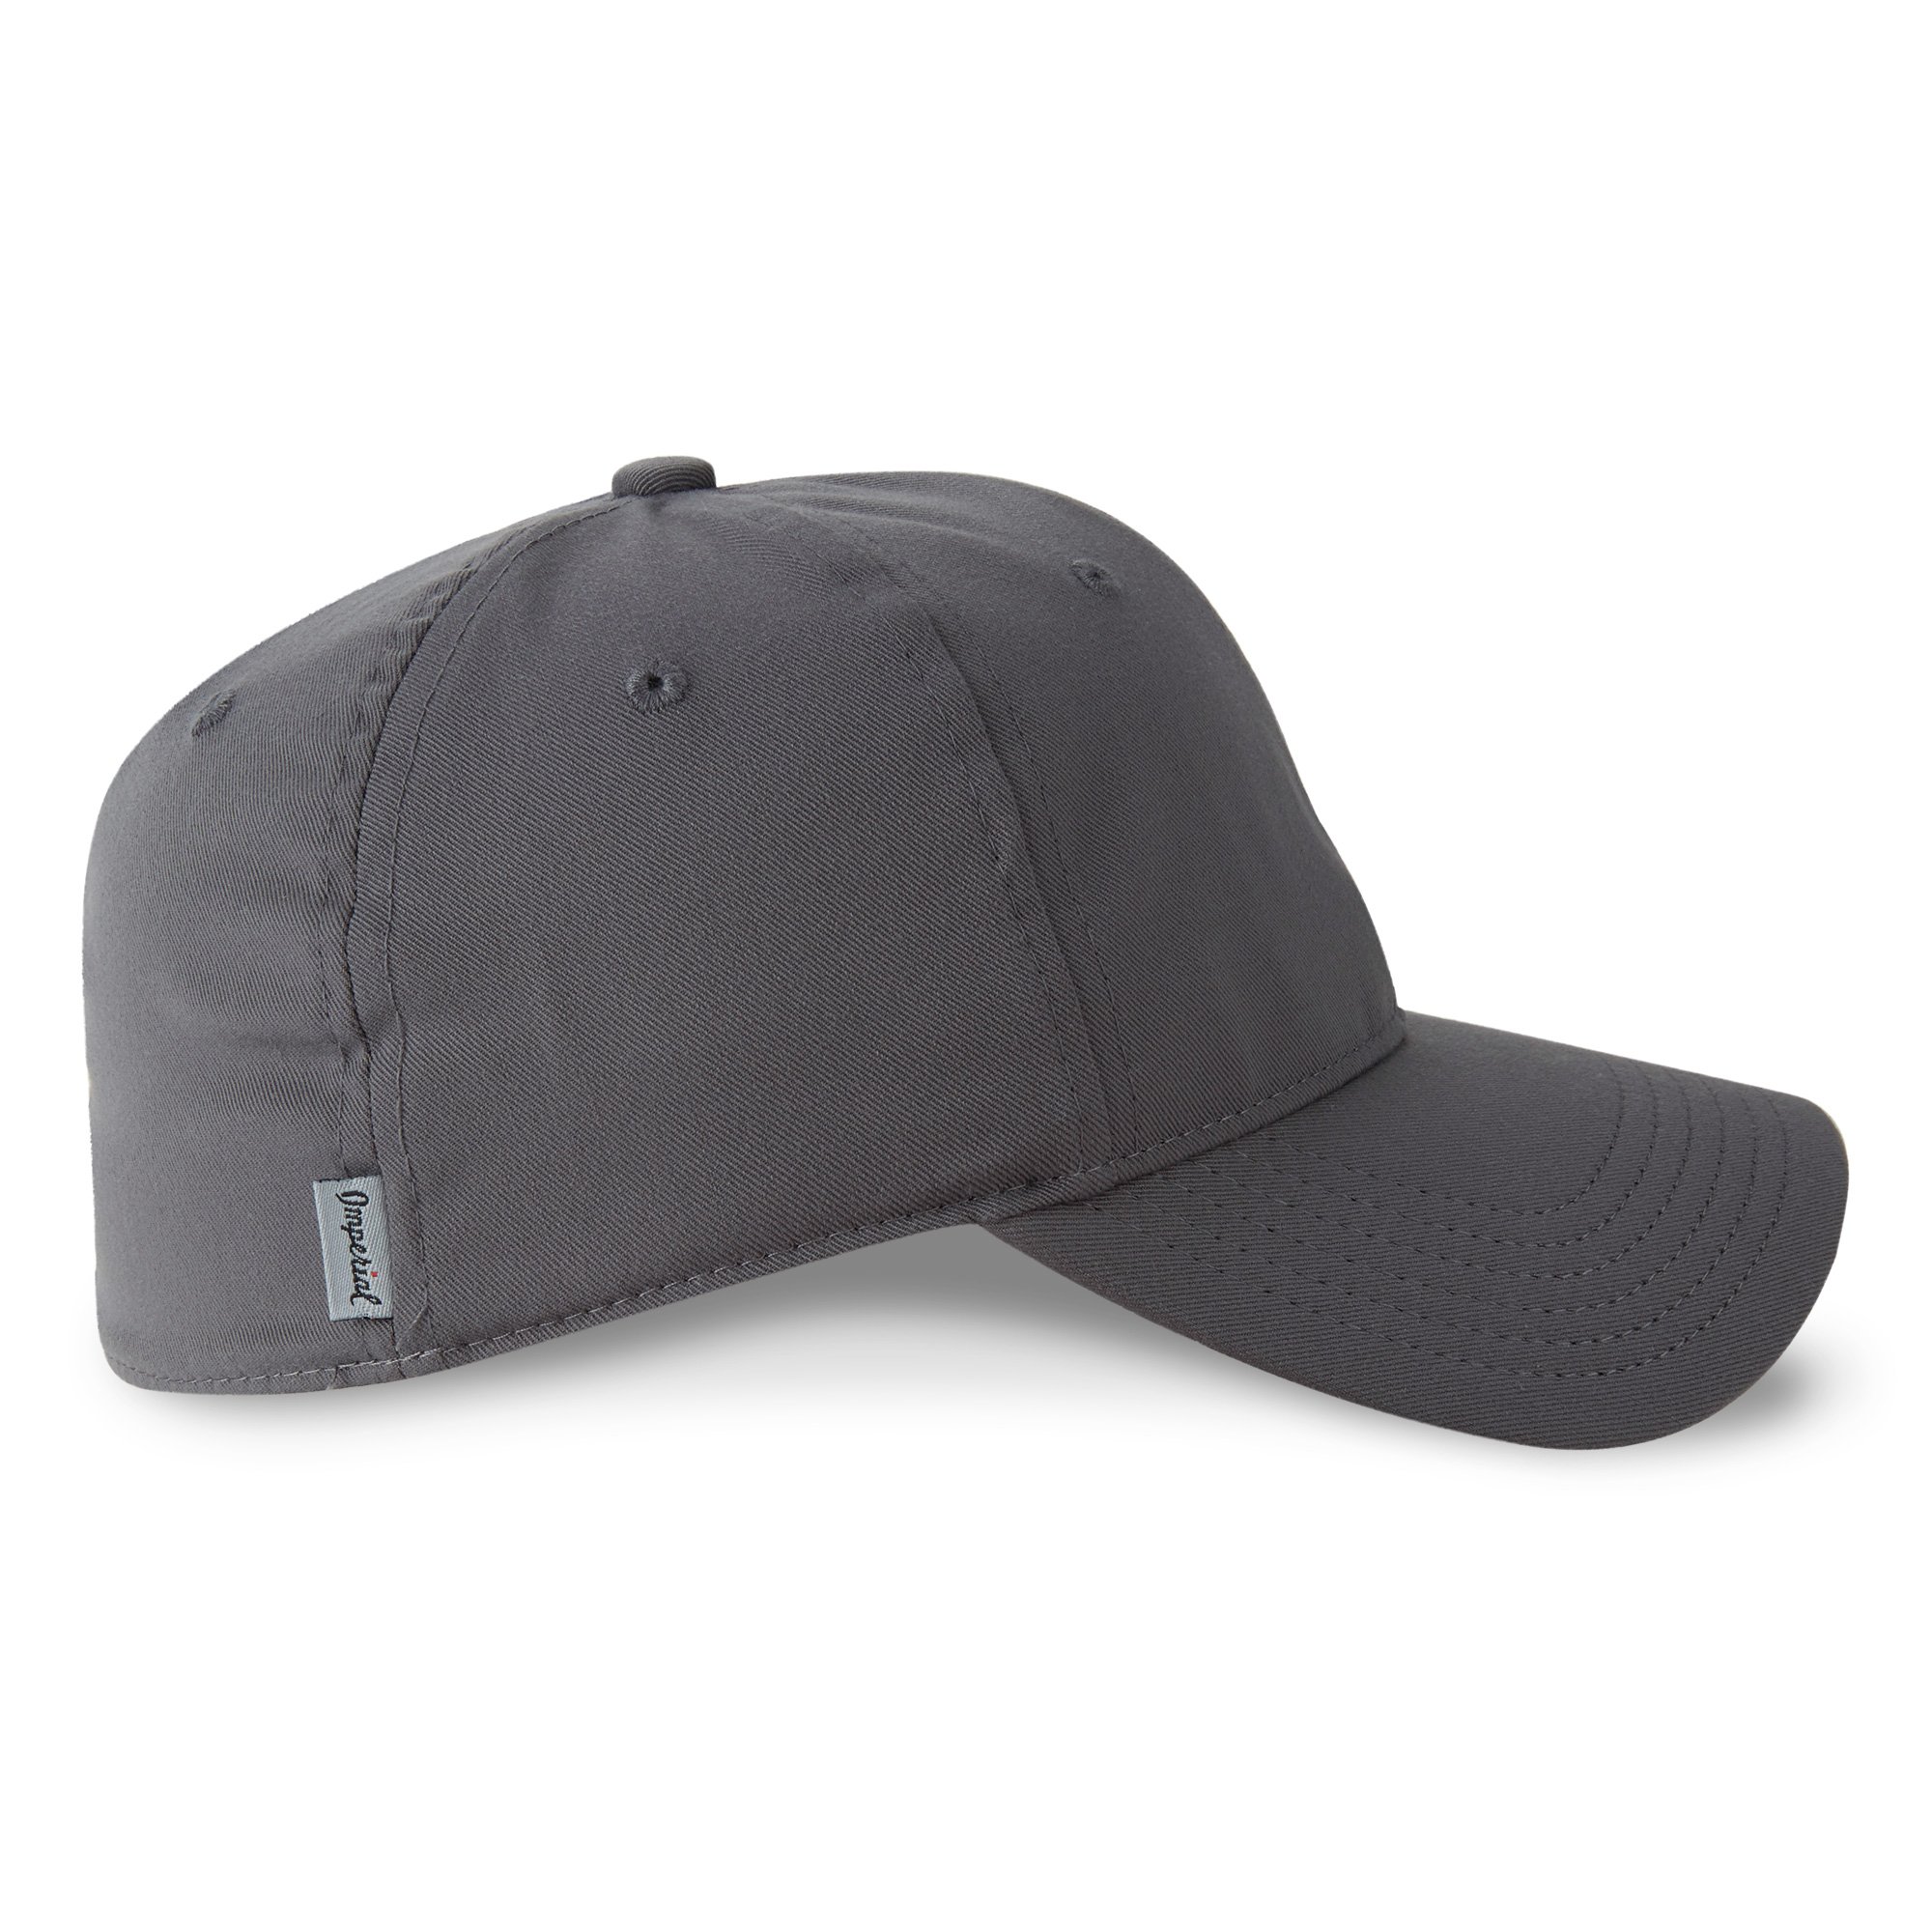 Stretch - Encore Cotton, Flexible Fit 2100 Lightweight The Hat